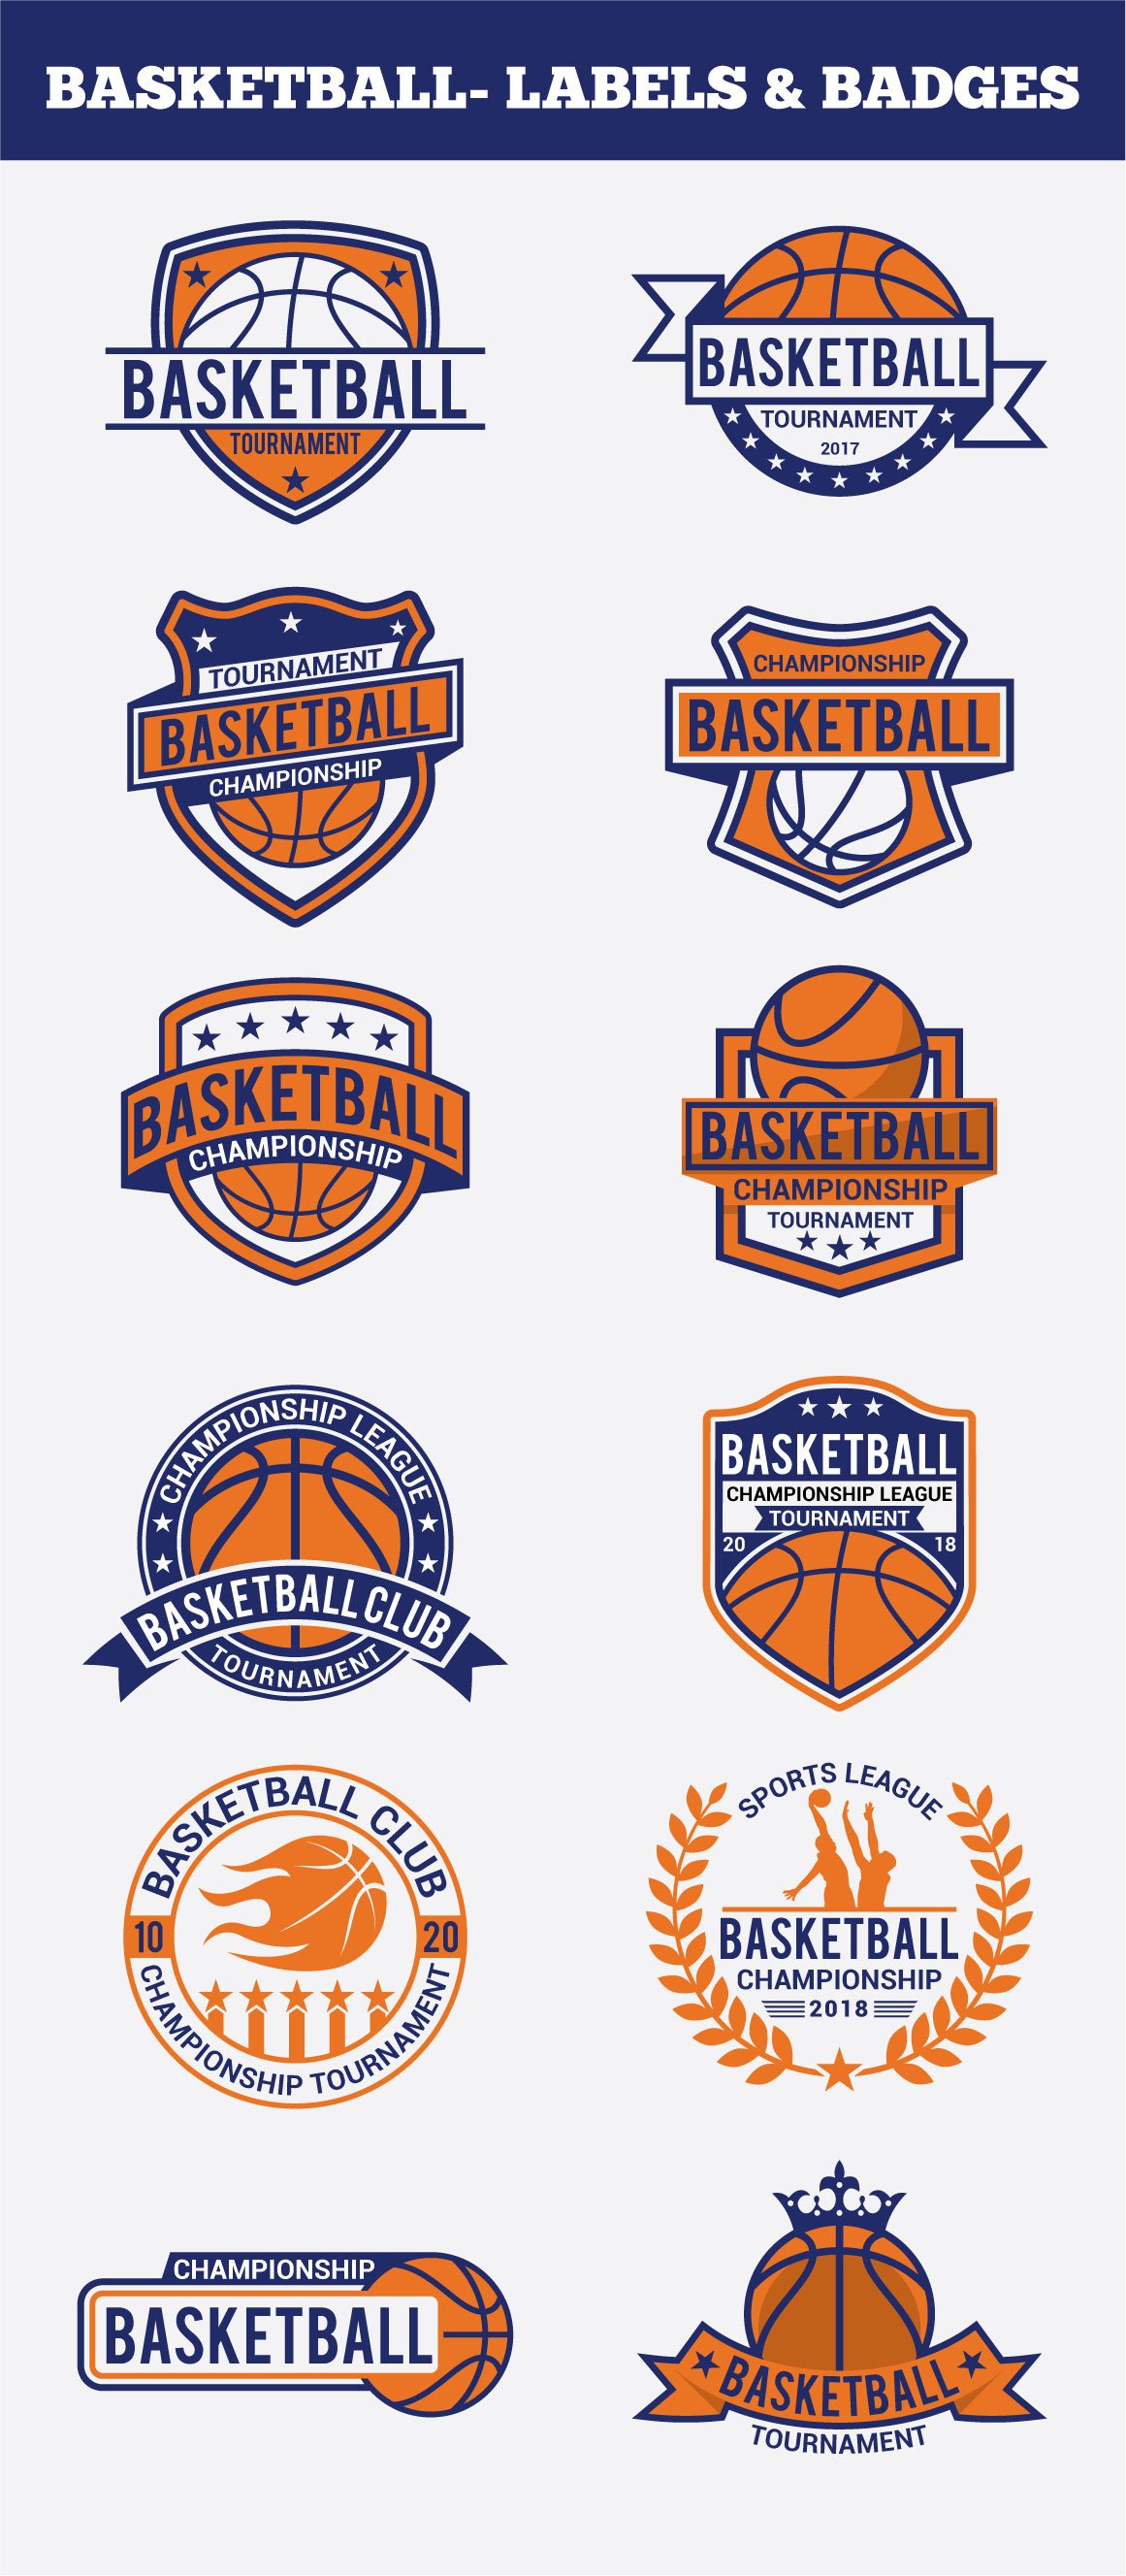 Blue basketball logos with orange elements.